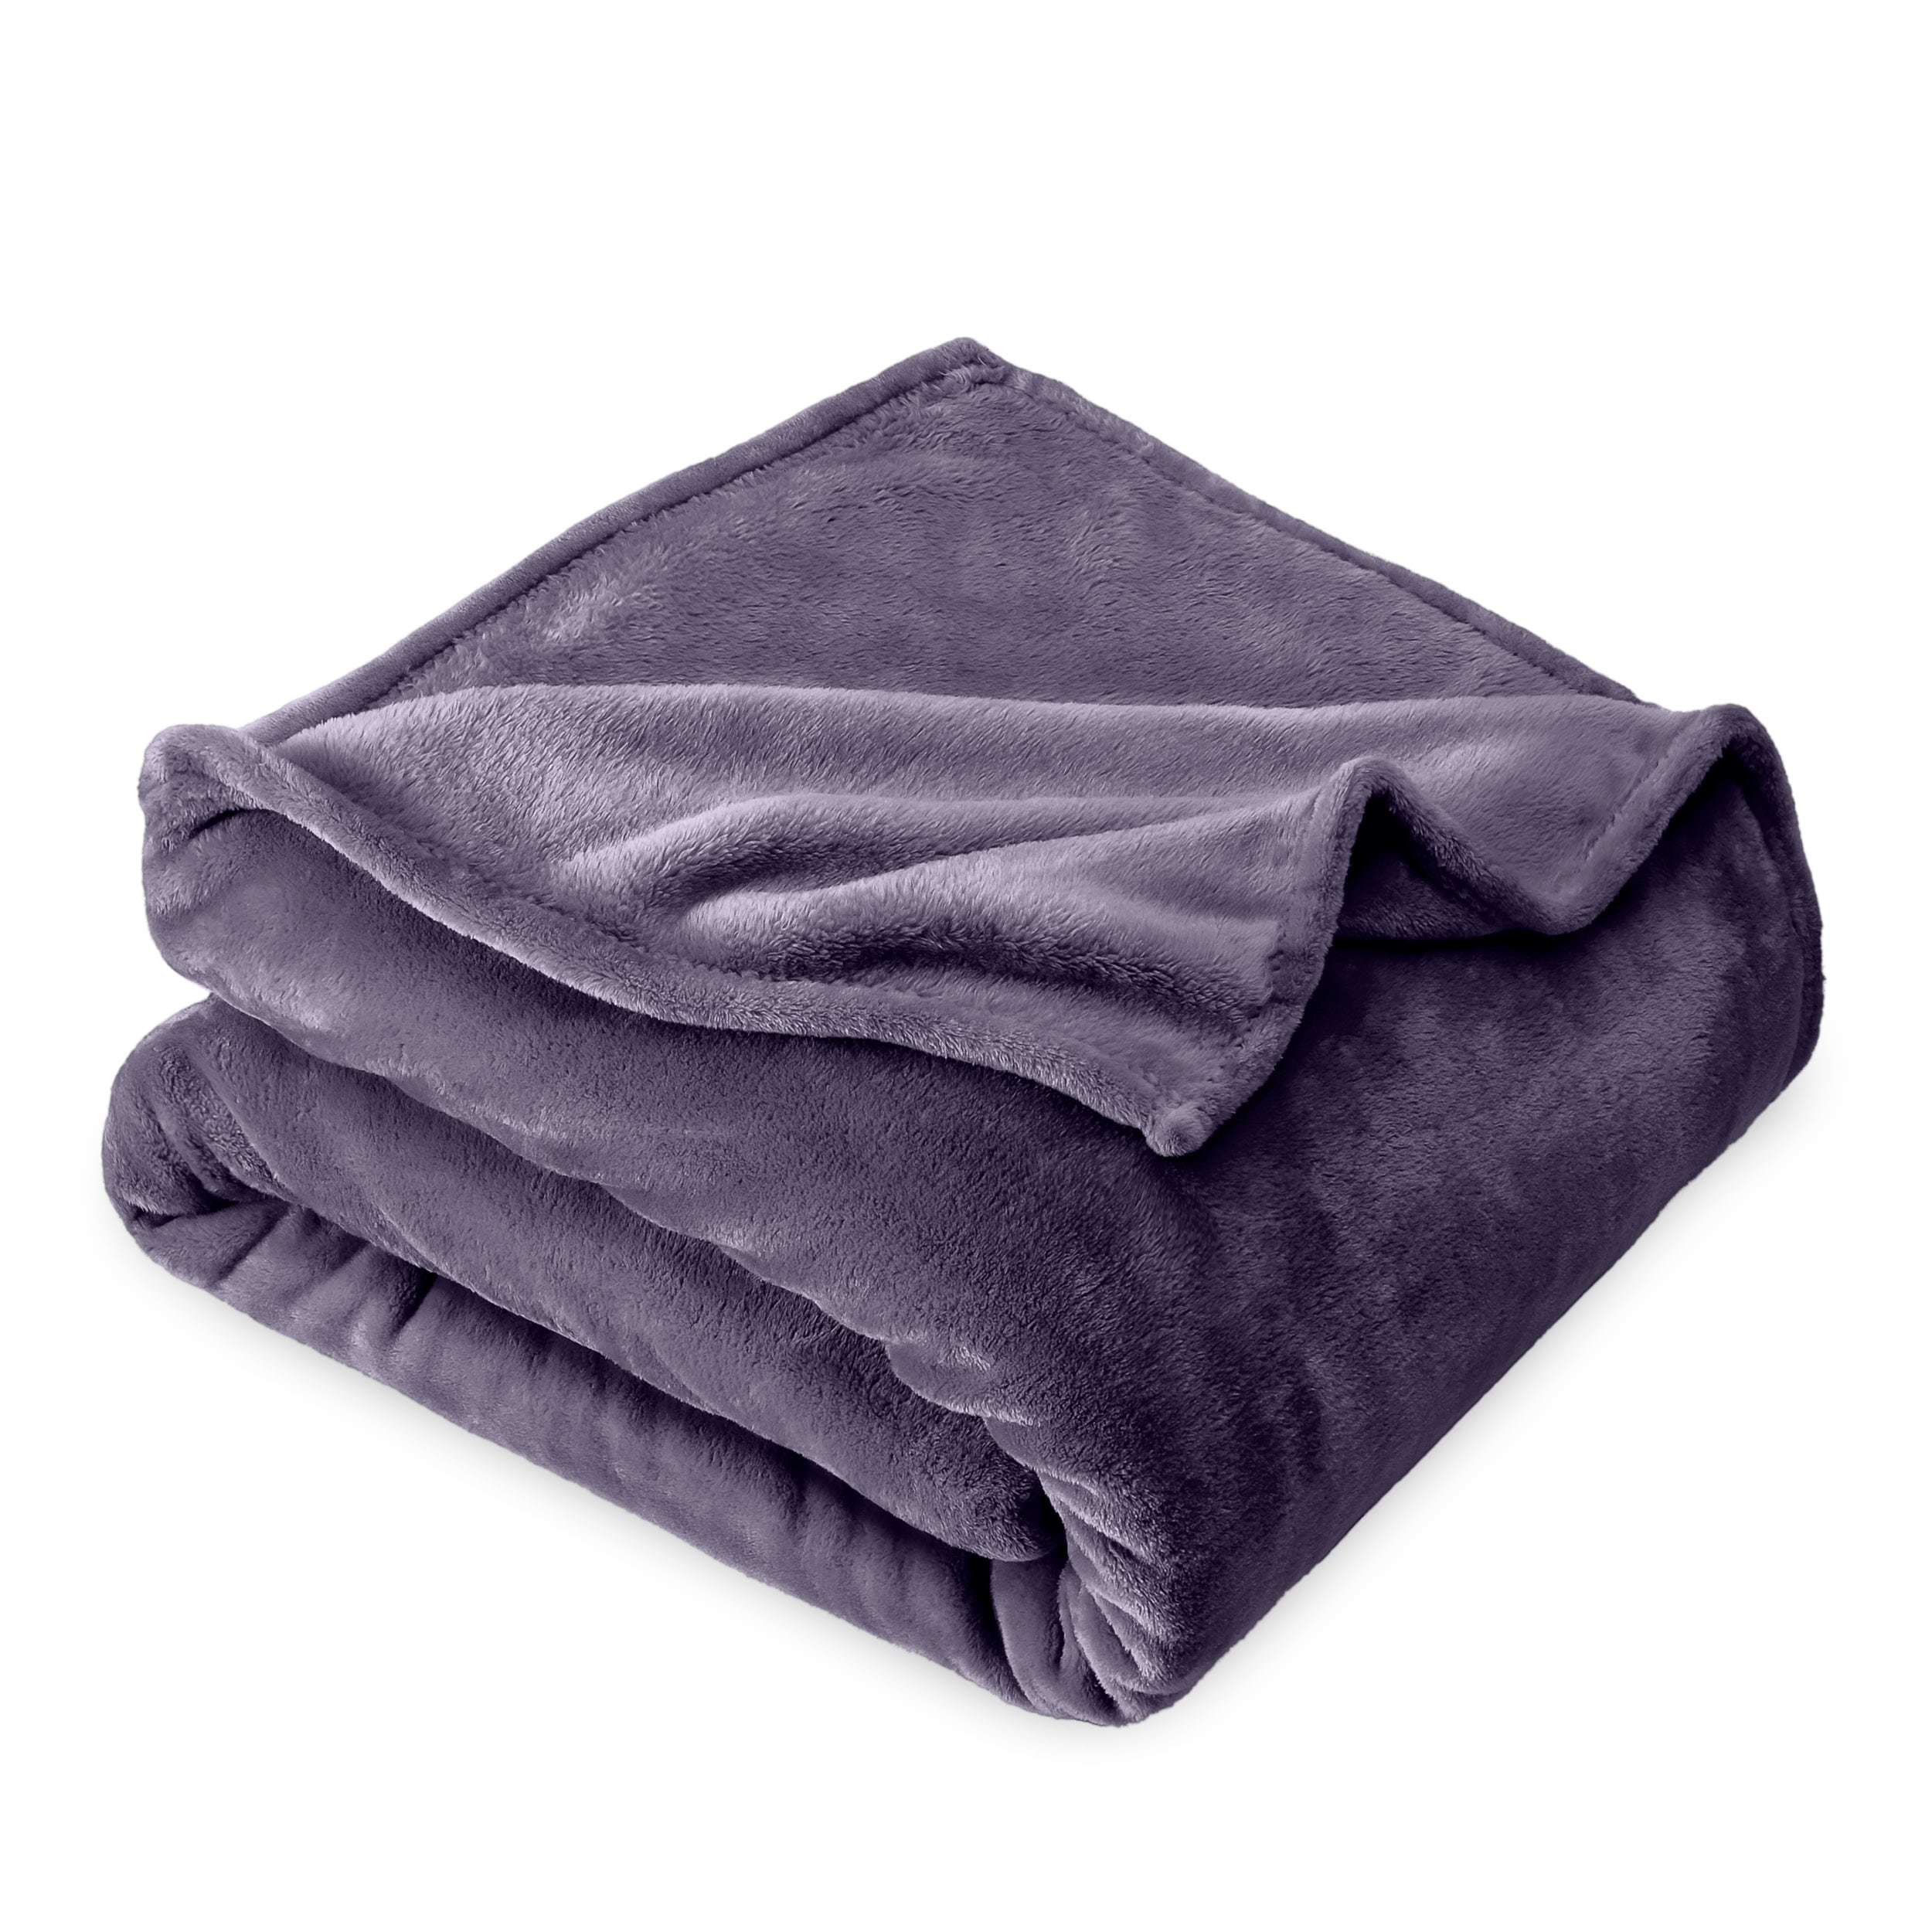 https://ak1.ostkcdn.com/images/products/is/images/direct/0d023aee9d5912b87b68be73ad266ab048ed2c9b/Bare-Home-Microplush-Fleece-Blanket---Ultra-Soft---Cozy-Fuzzy-Warm.jpg